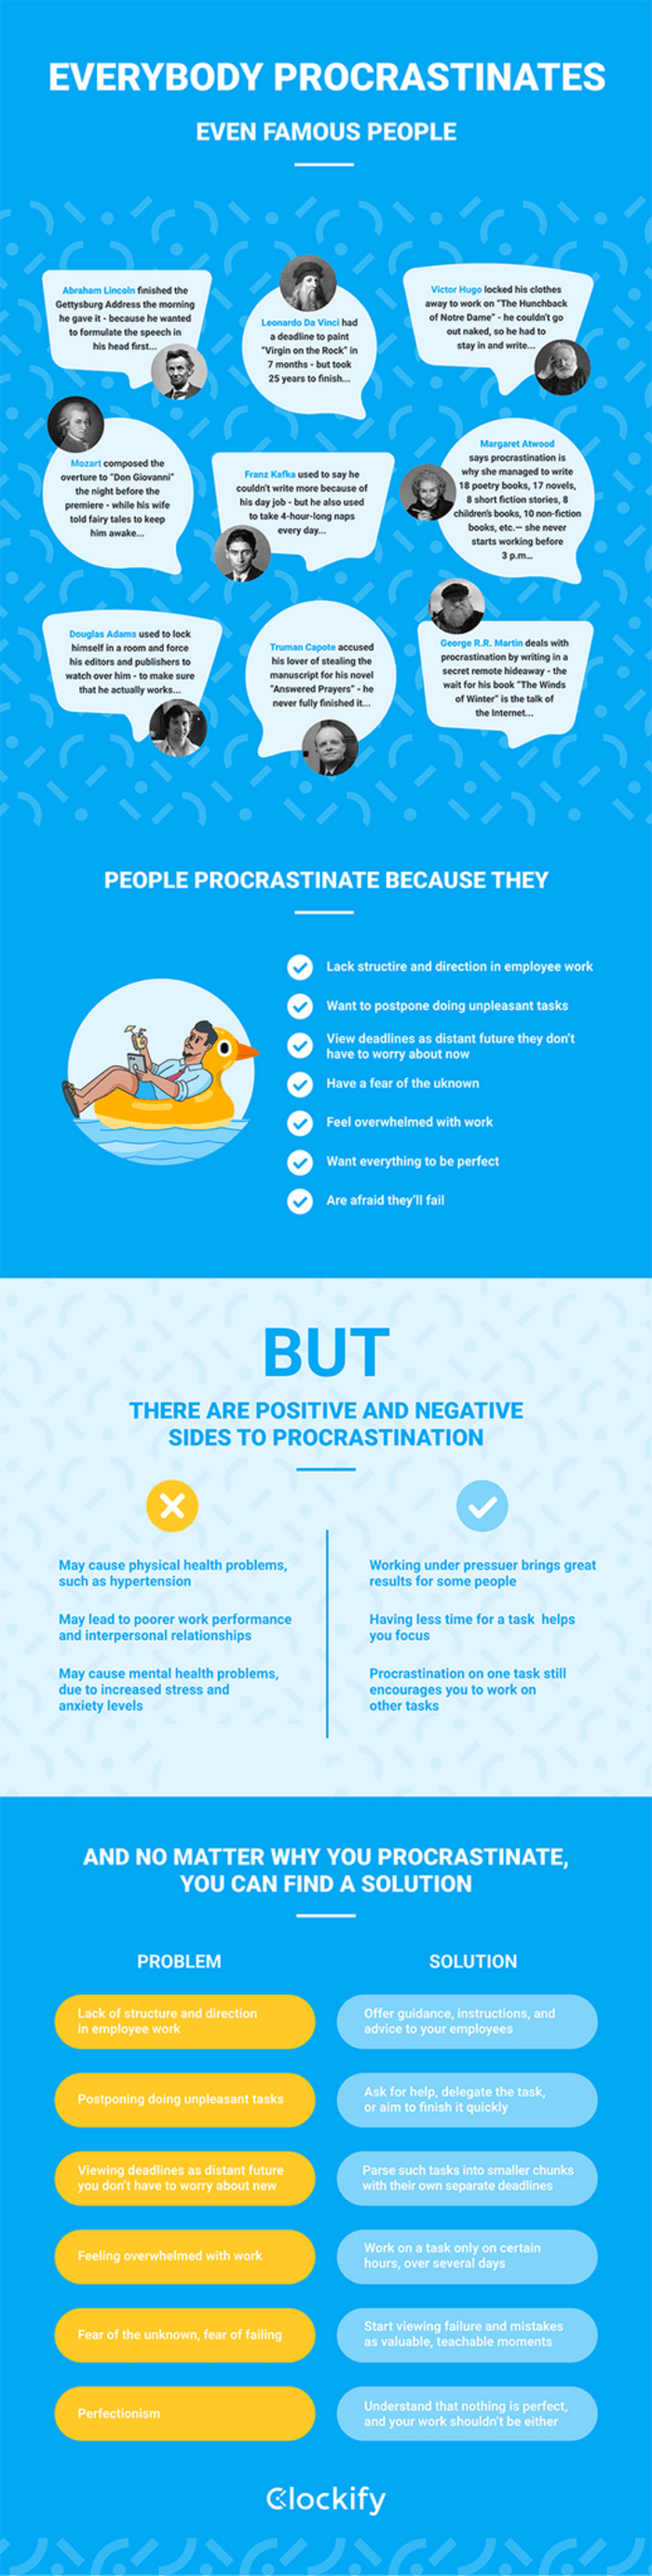 Procrastination guide